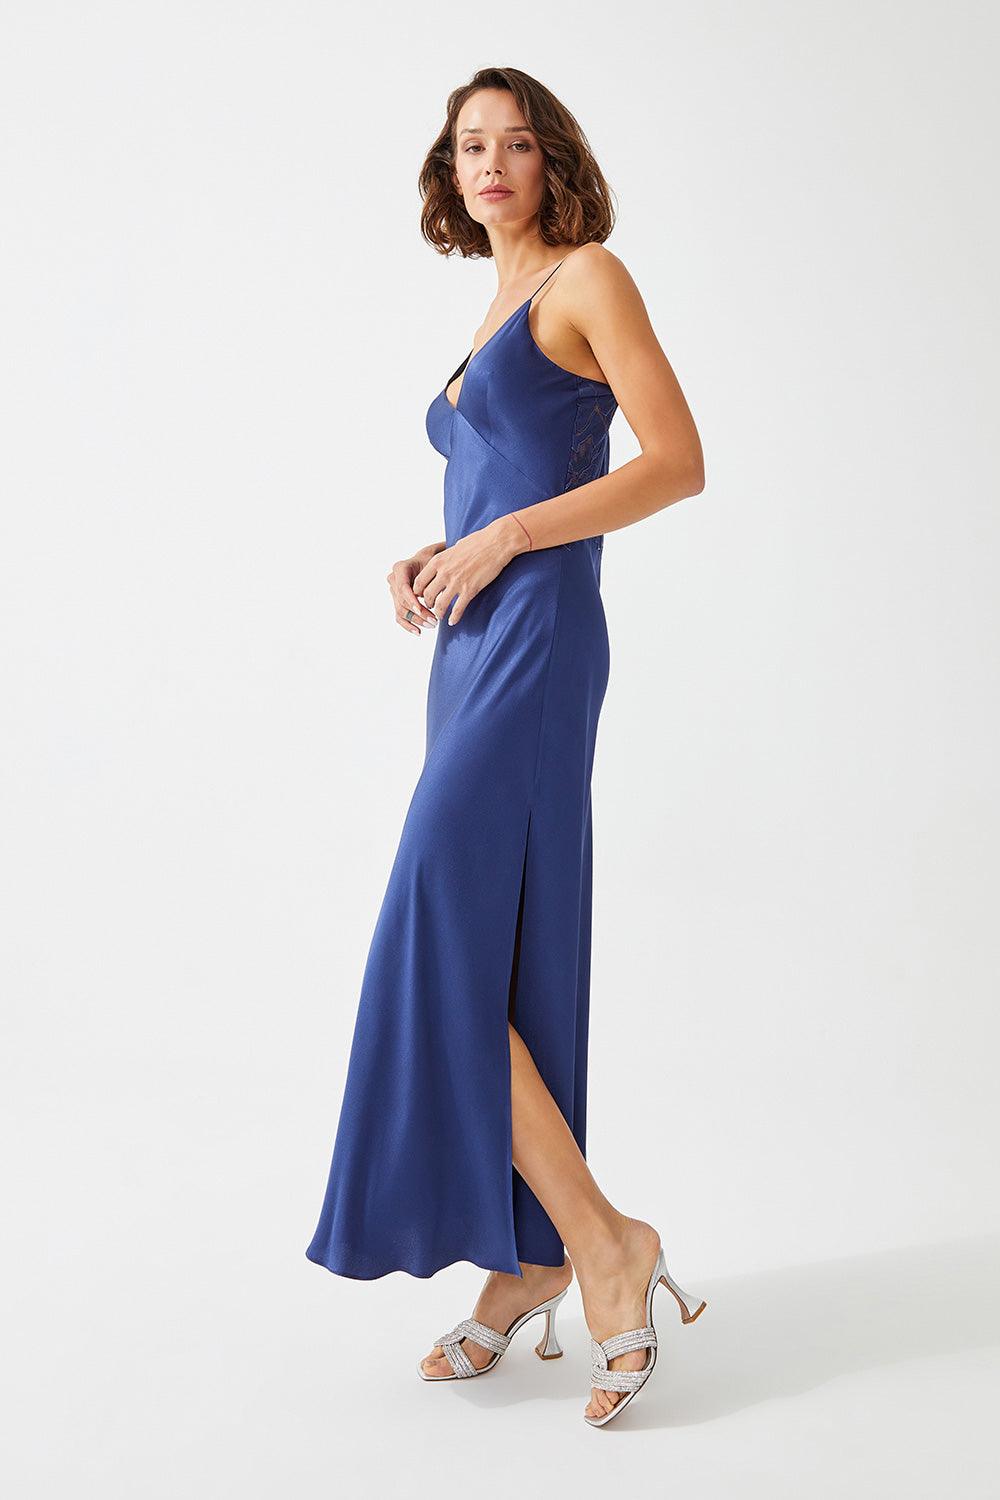 Navie Long Rayon Trimmed Slip Dress - Navy Blue - Bocan